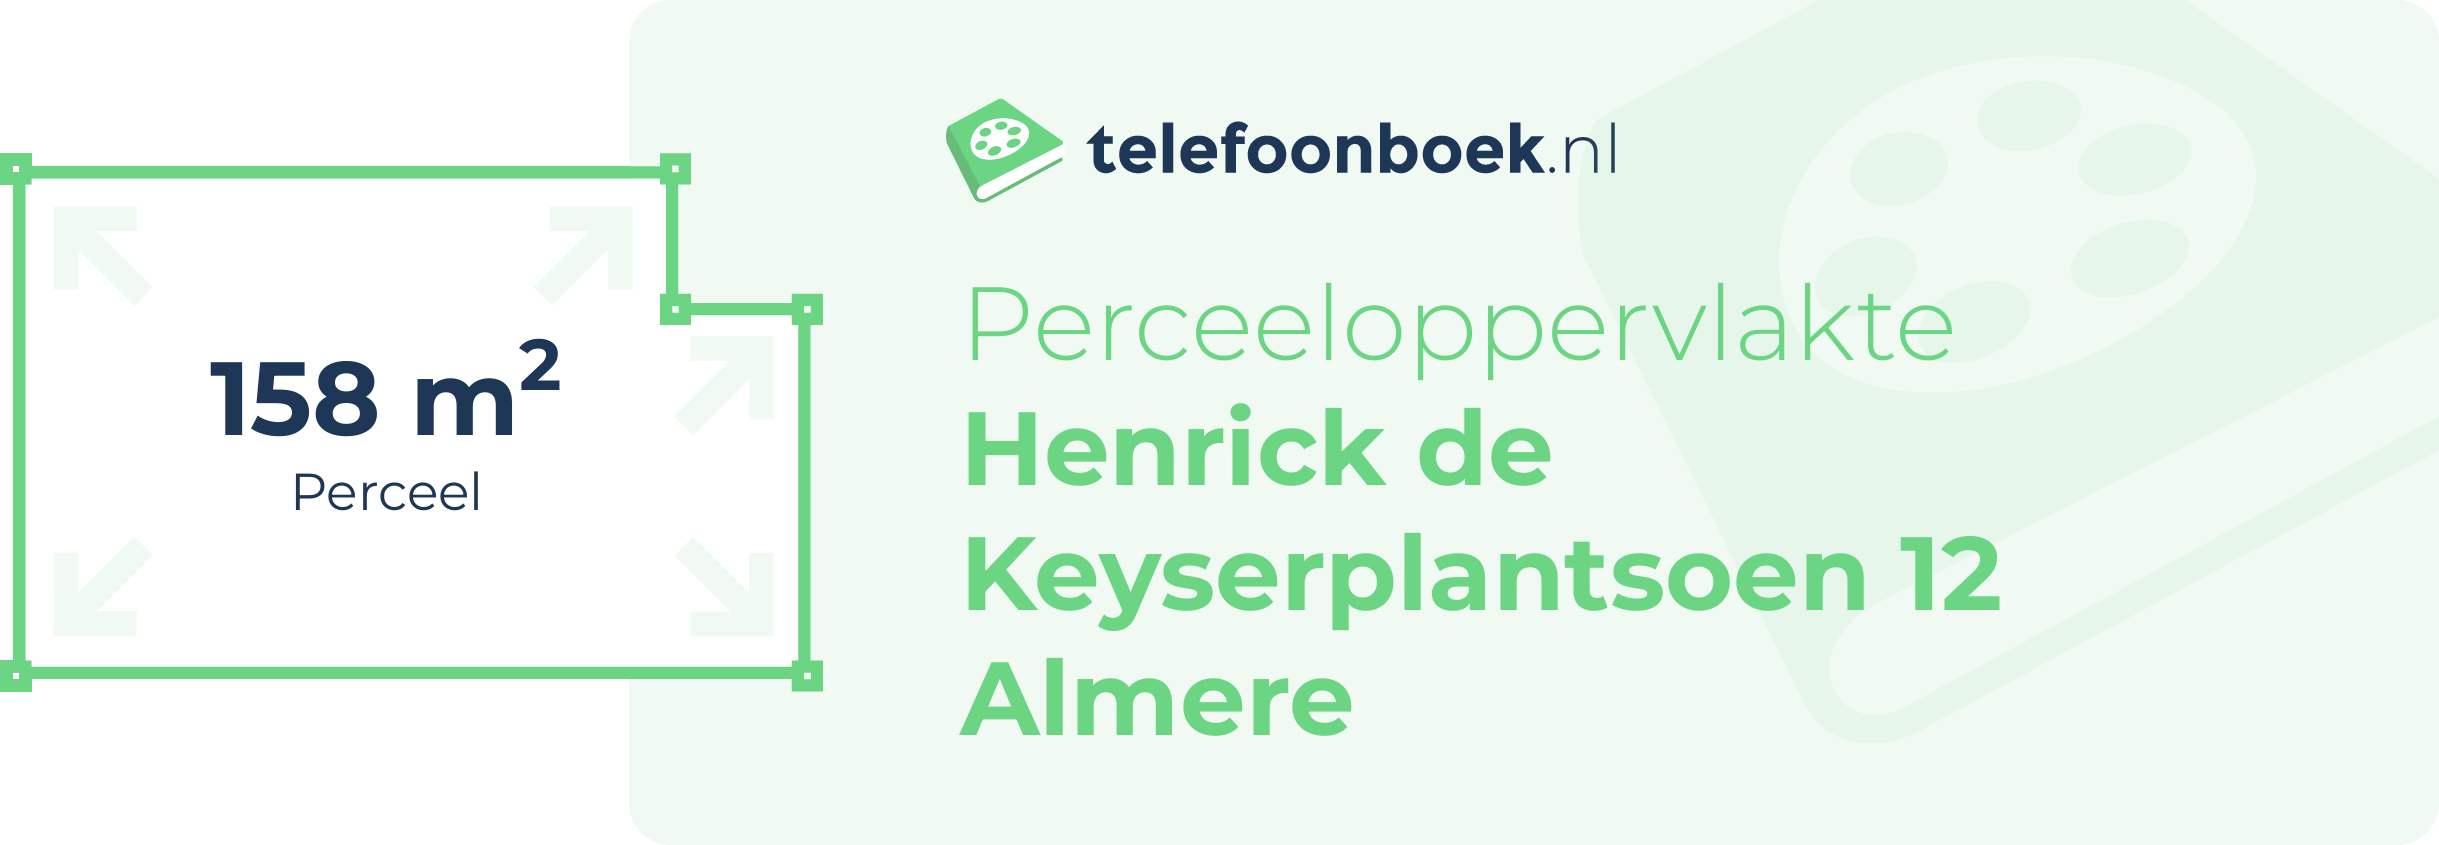 Perceeloppervlakte Henrick De Keyserplantsoen 12 Almere